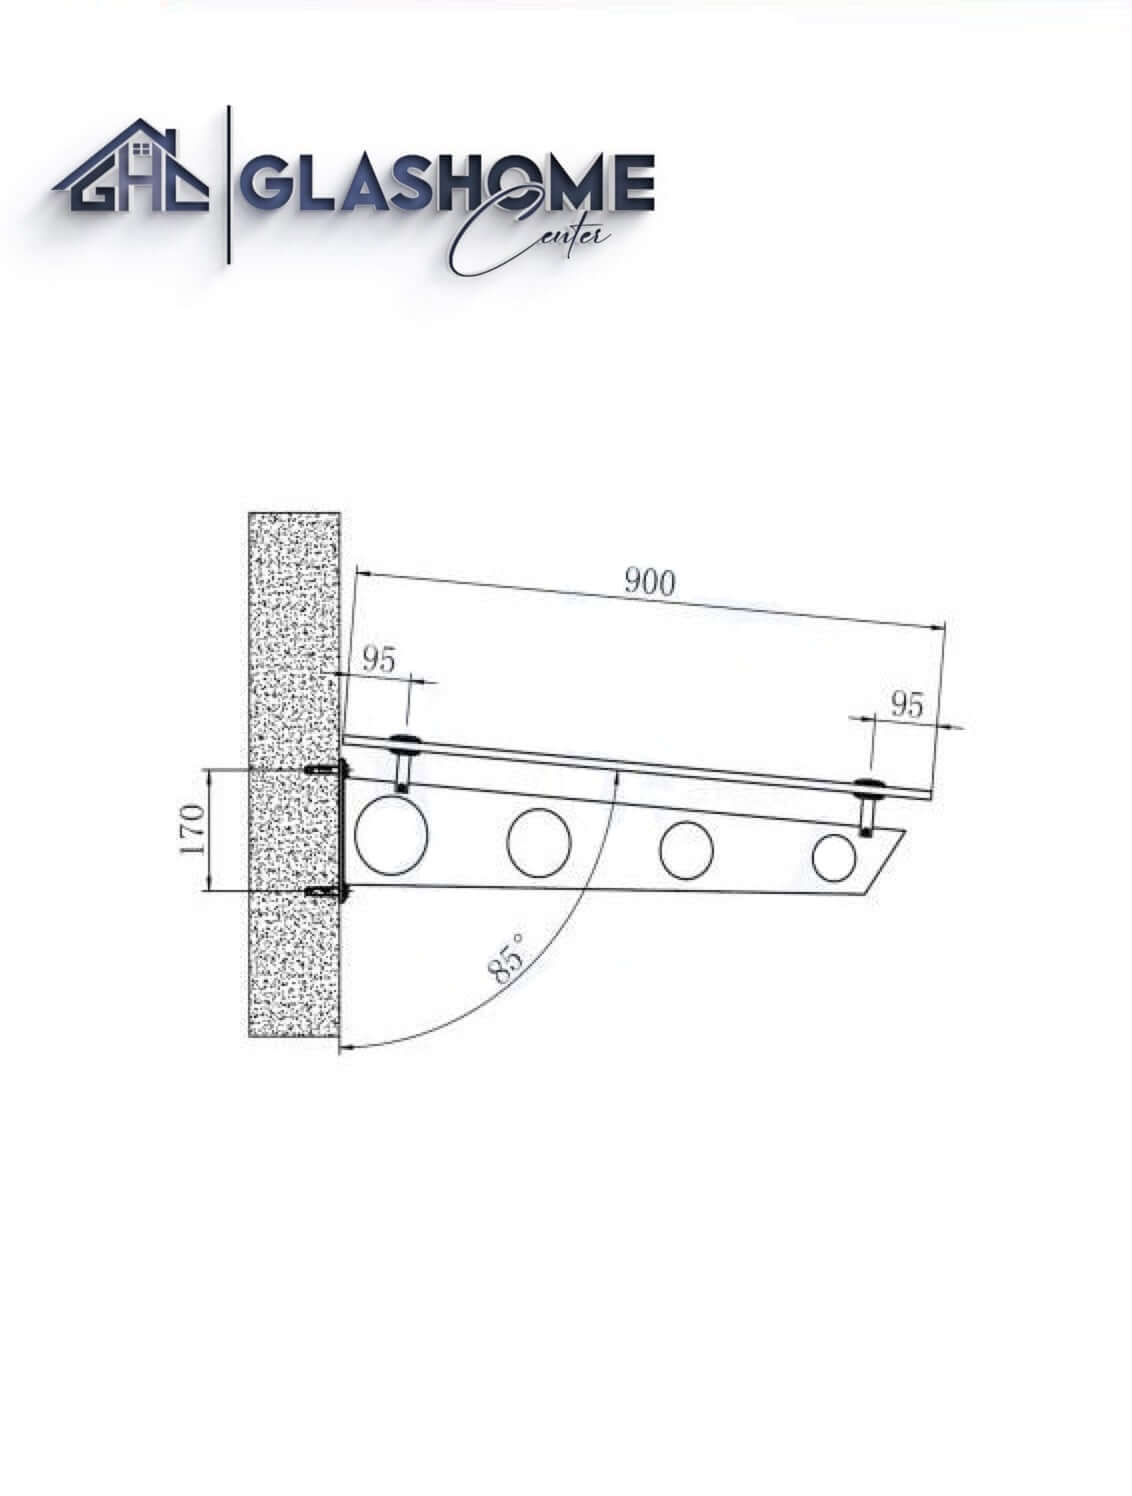 GlasHomeCenter - Glasvordach - Grauglas - 150x90cm - 13.1mm VSG - inkl. 2 Edelstahlhalterungen Variante "Stockholm"